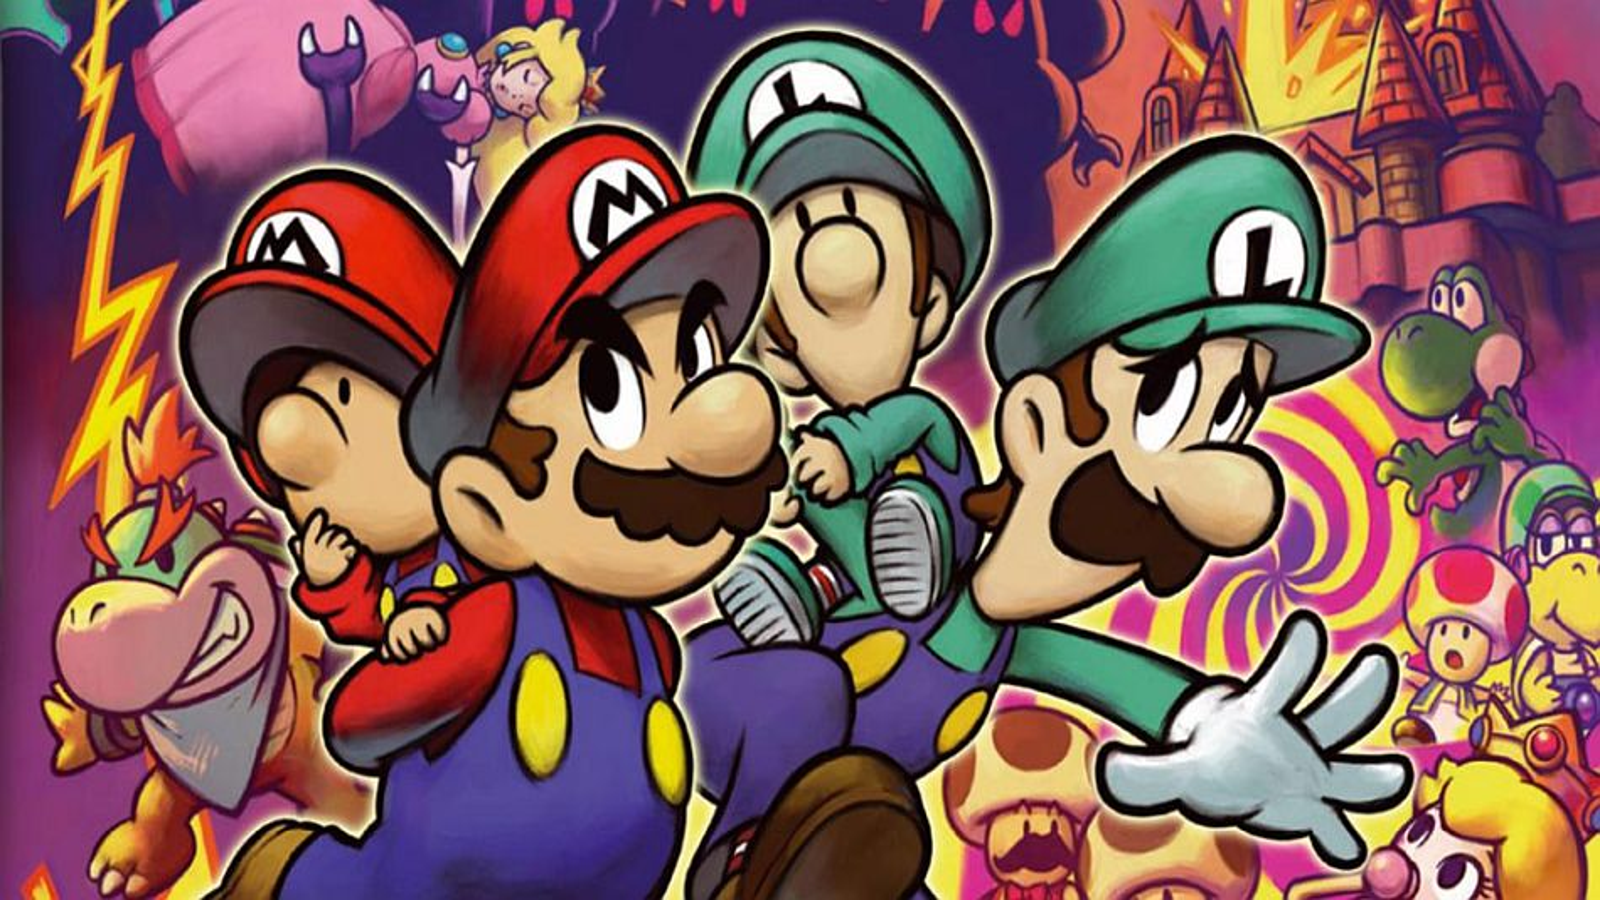 Mario bros special. Грибное королевство Марио. Mario 10. Супер Марио 64. Mario and Luigi.